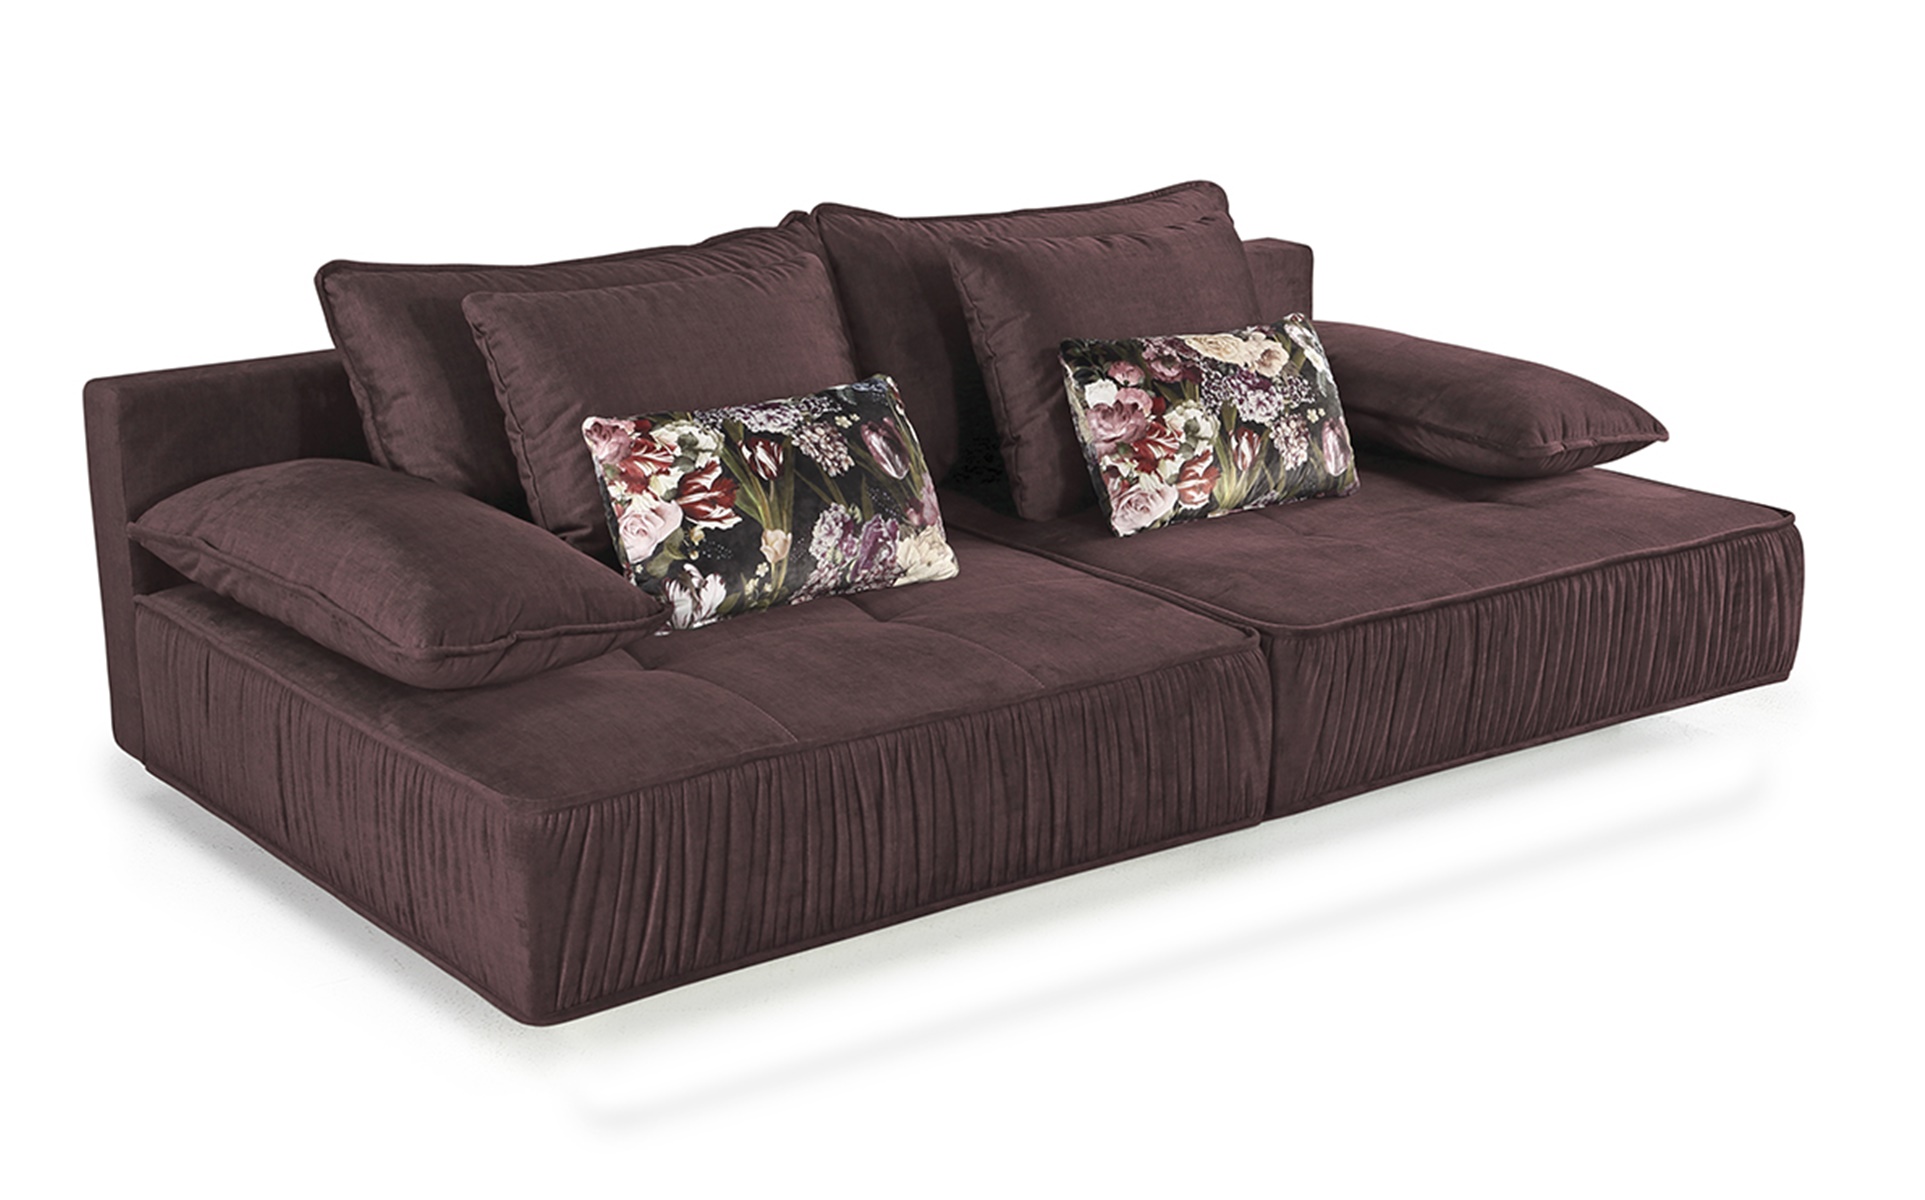 Big-Sofa inkl. Bodenbeleuchtung MARRAKESCH von JOB Samt aubergine